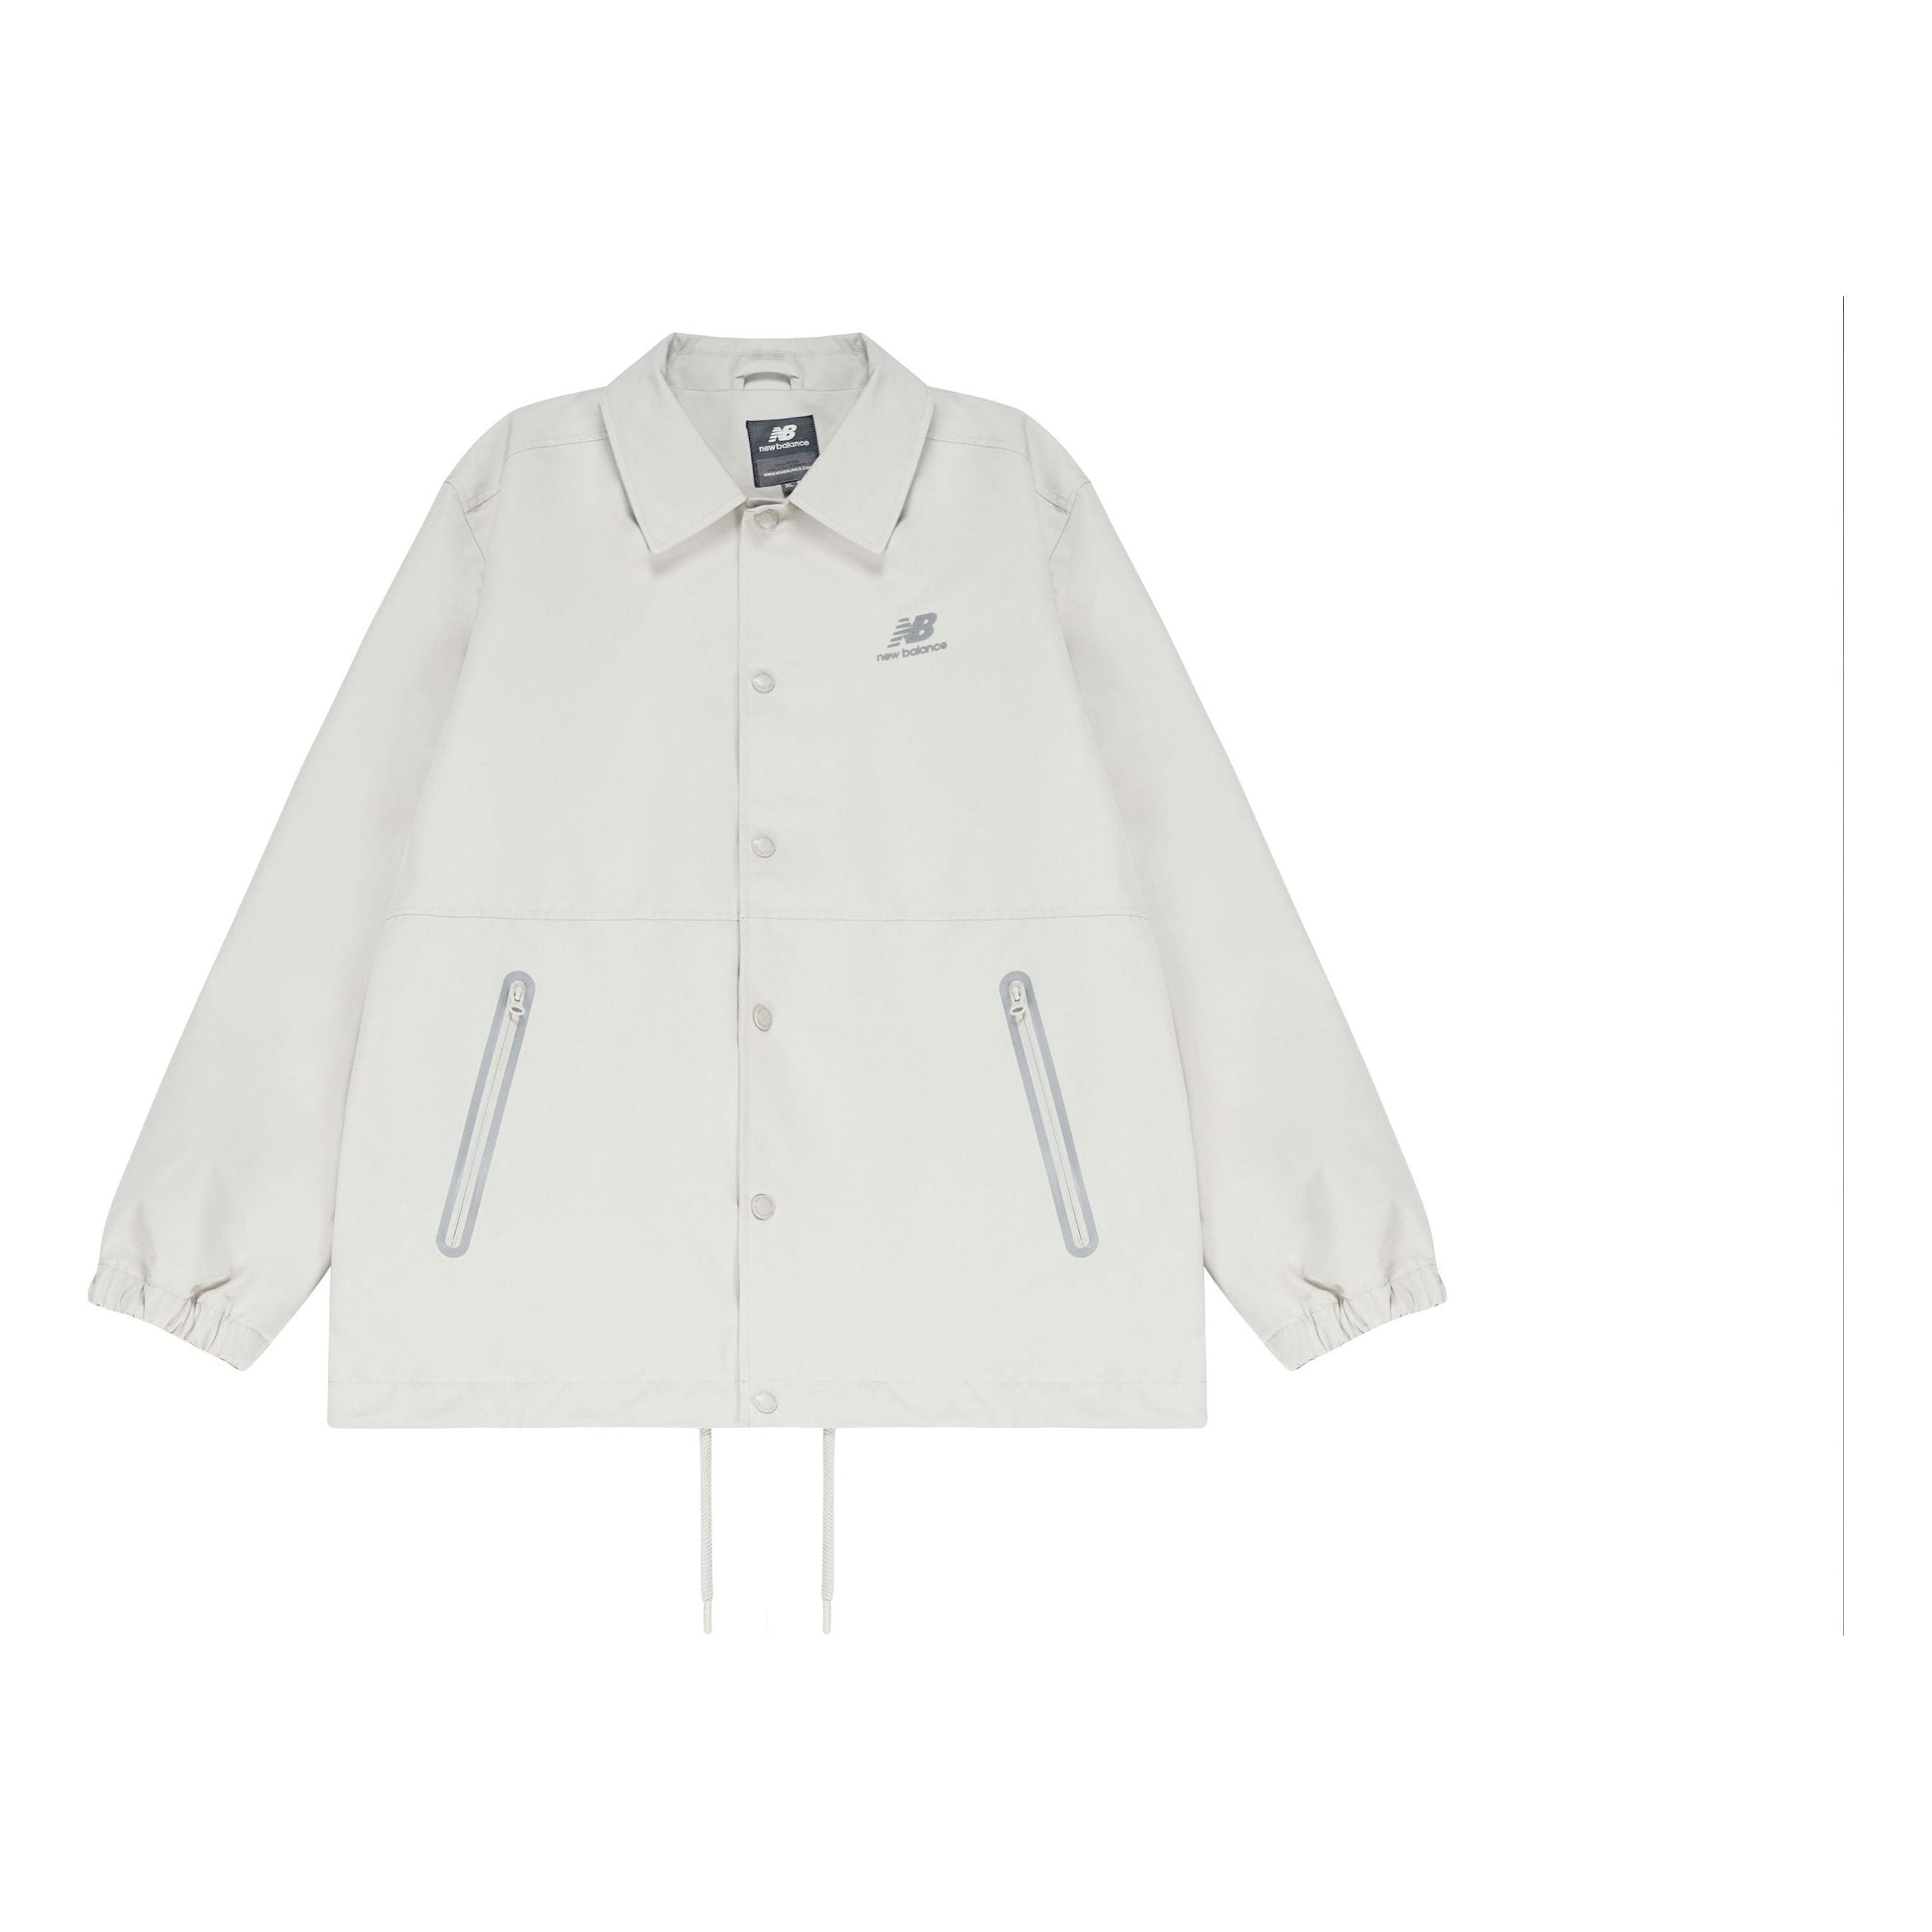 New Balance Sport Jacket 'White' 5AC39503-LBE - 1